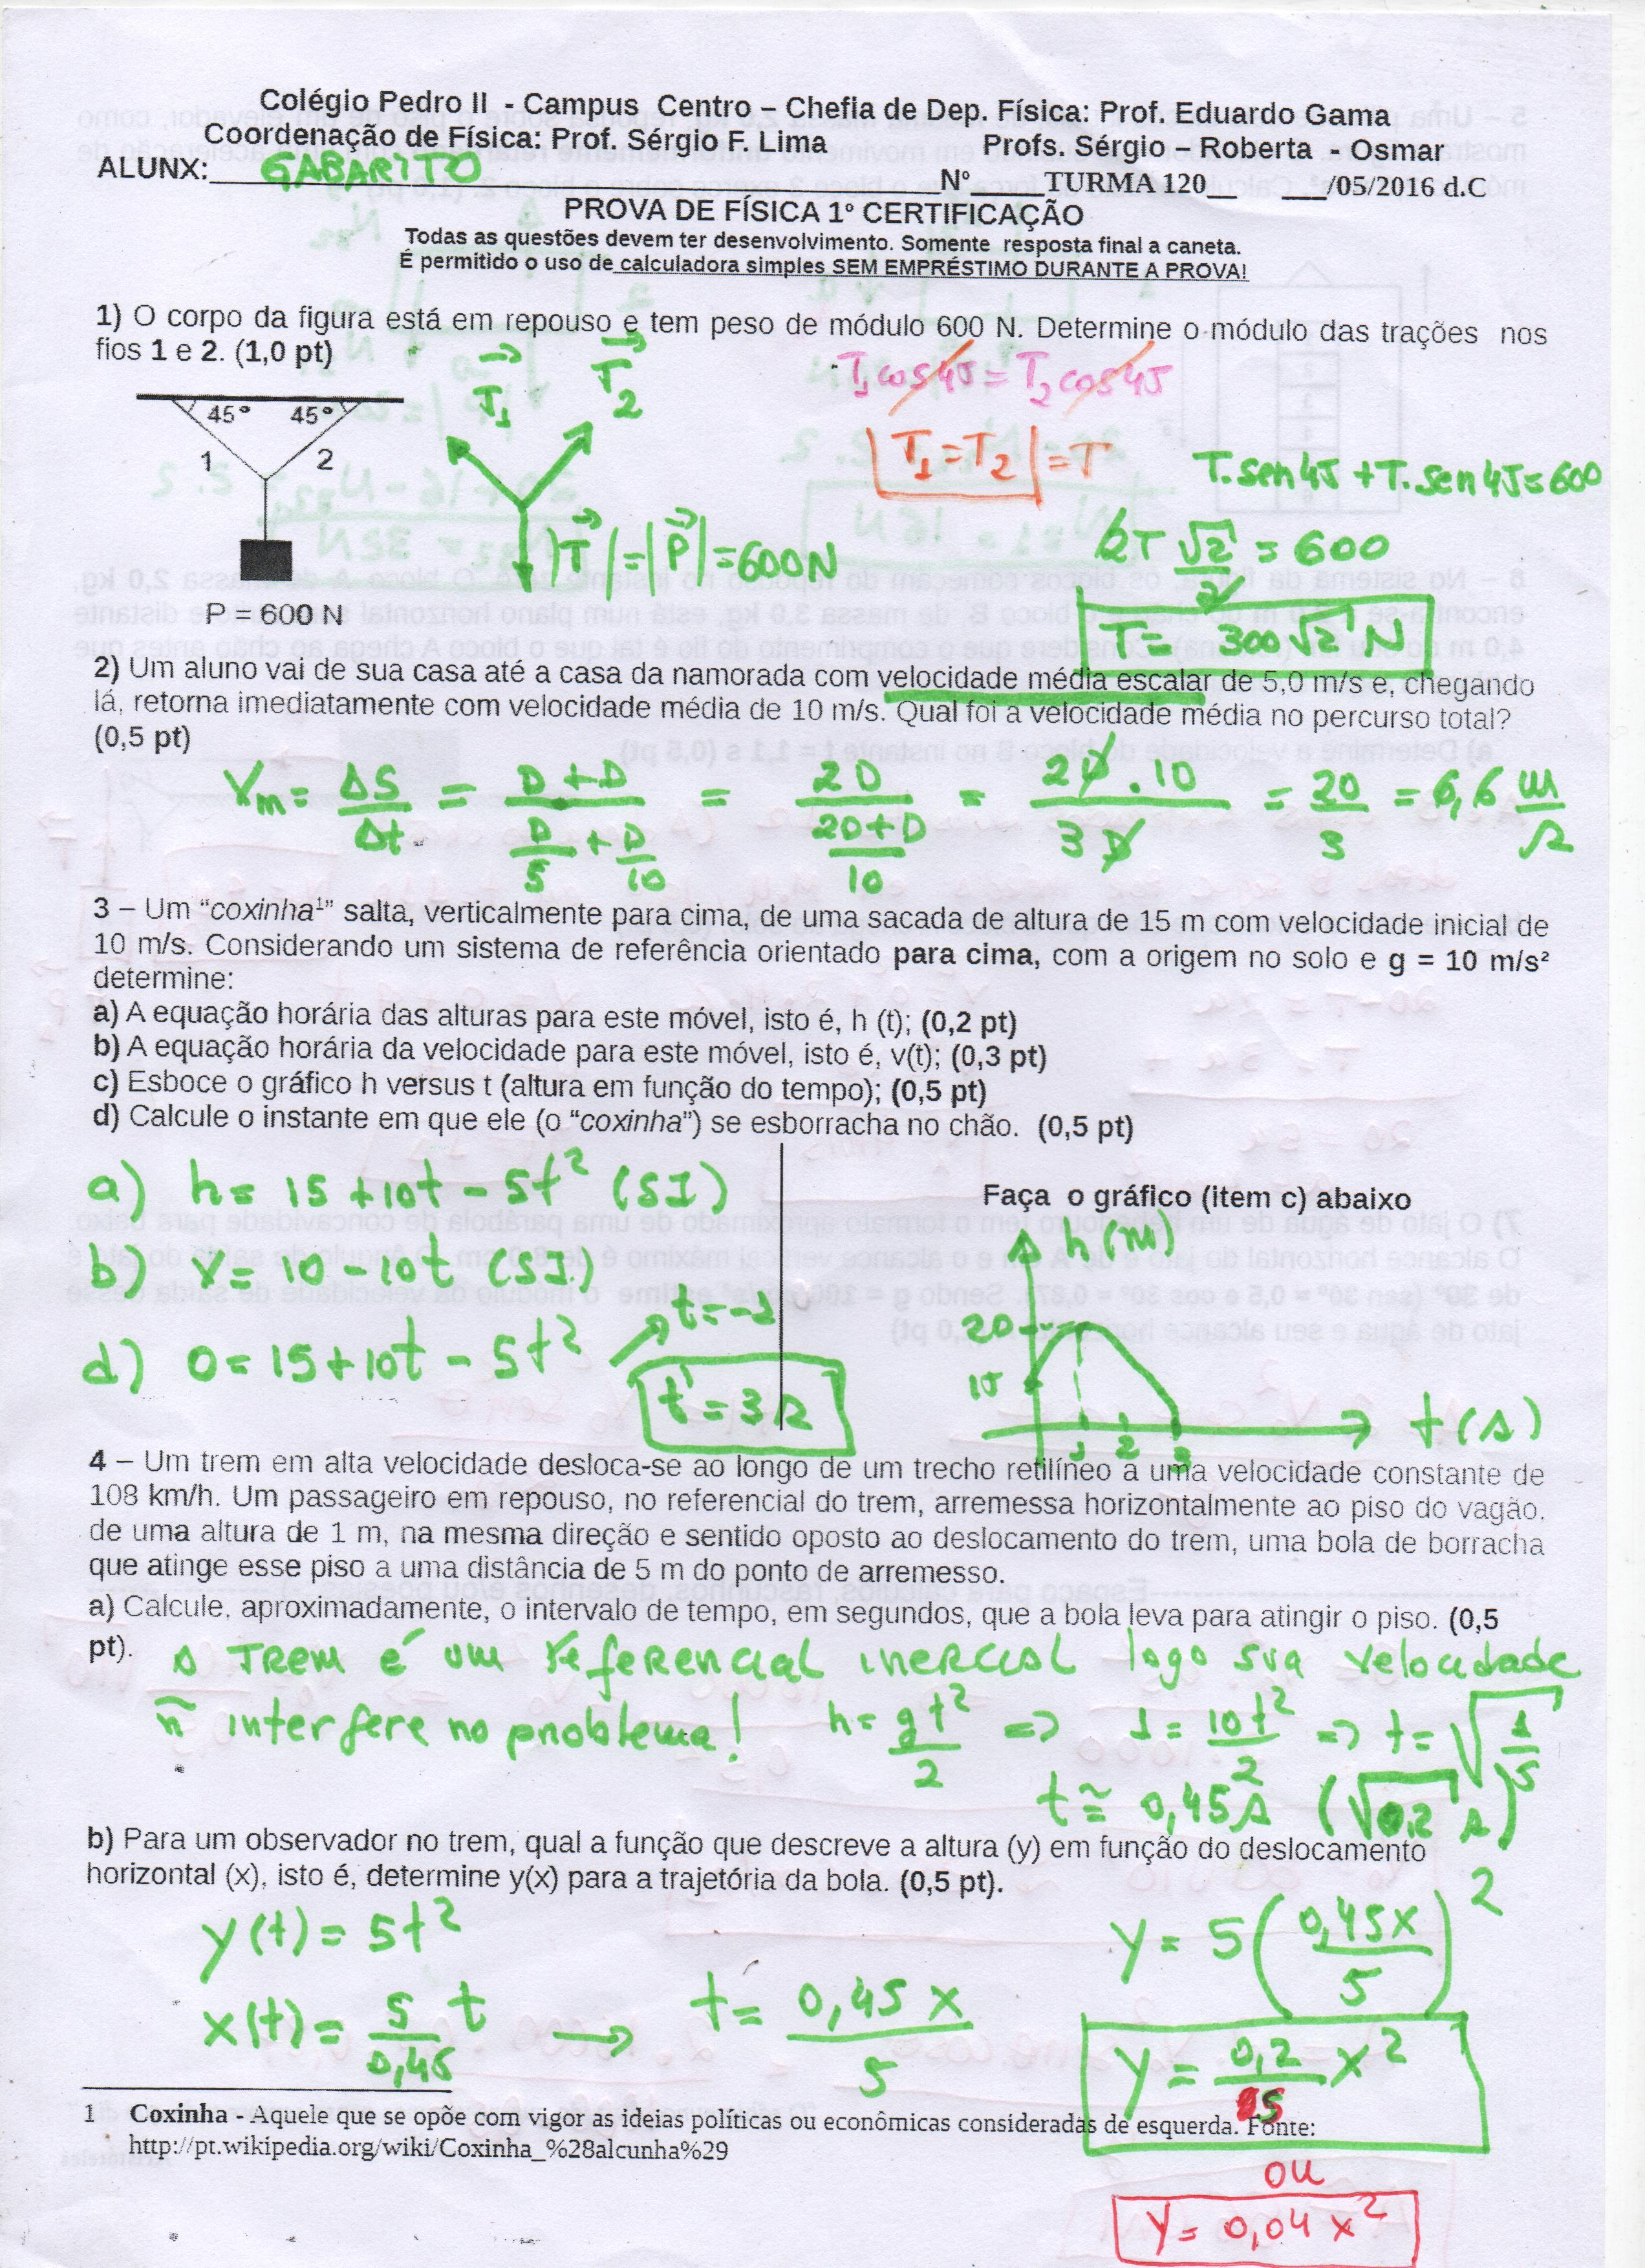 Página 01 gabarito prova de física